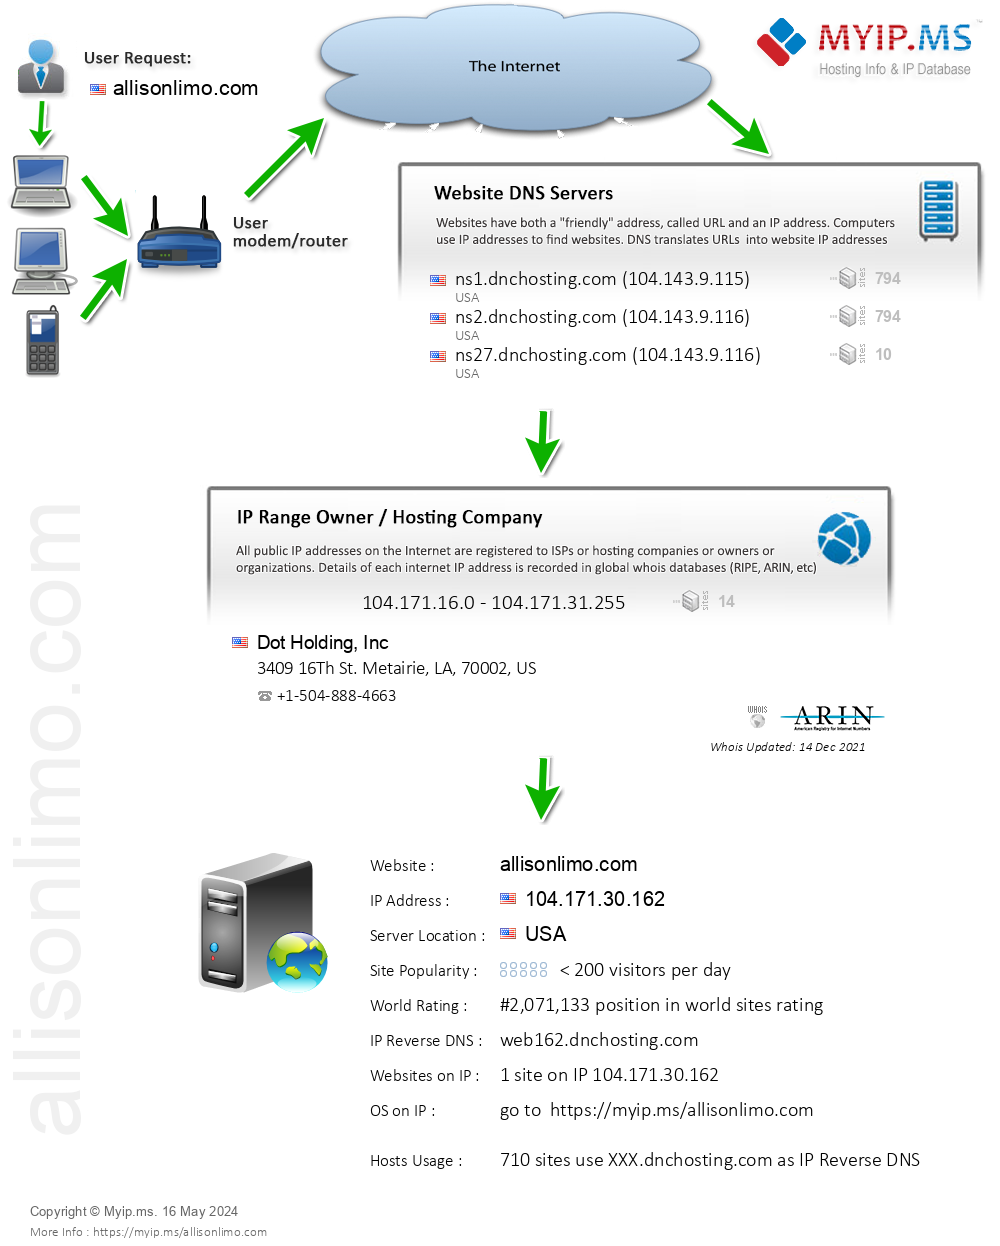 Allisonlimo.com - Website Hosting Visual IP Diagram